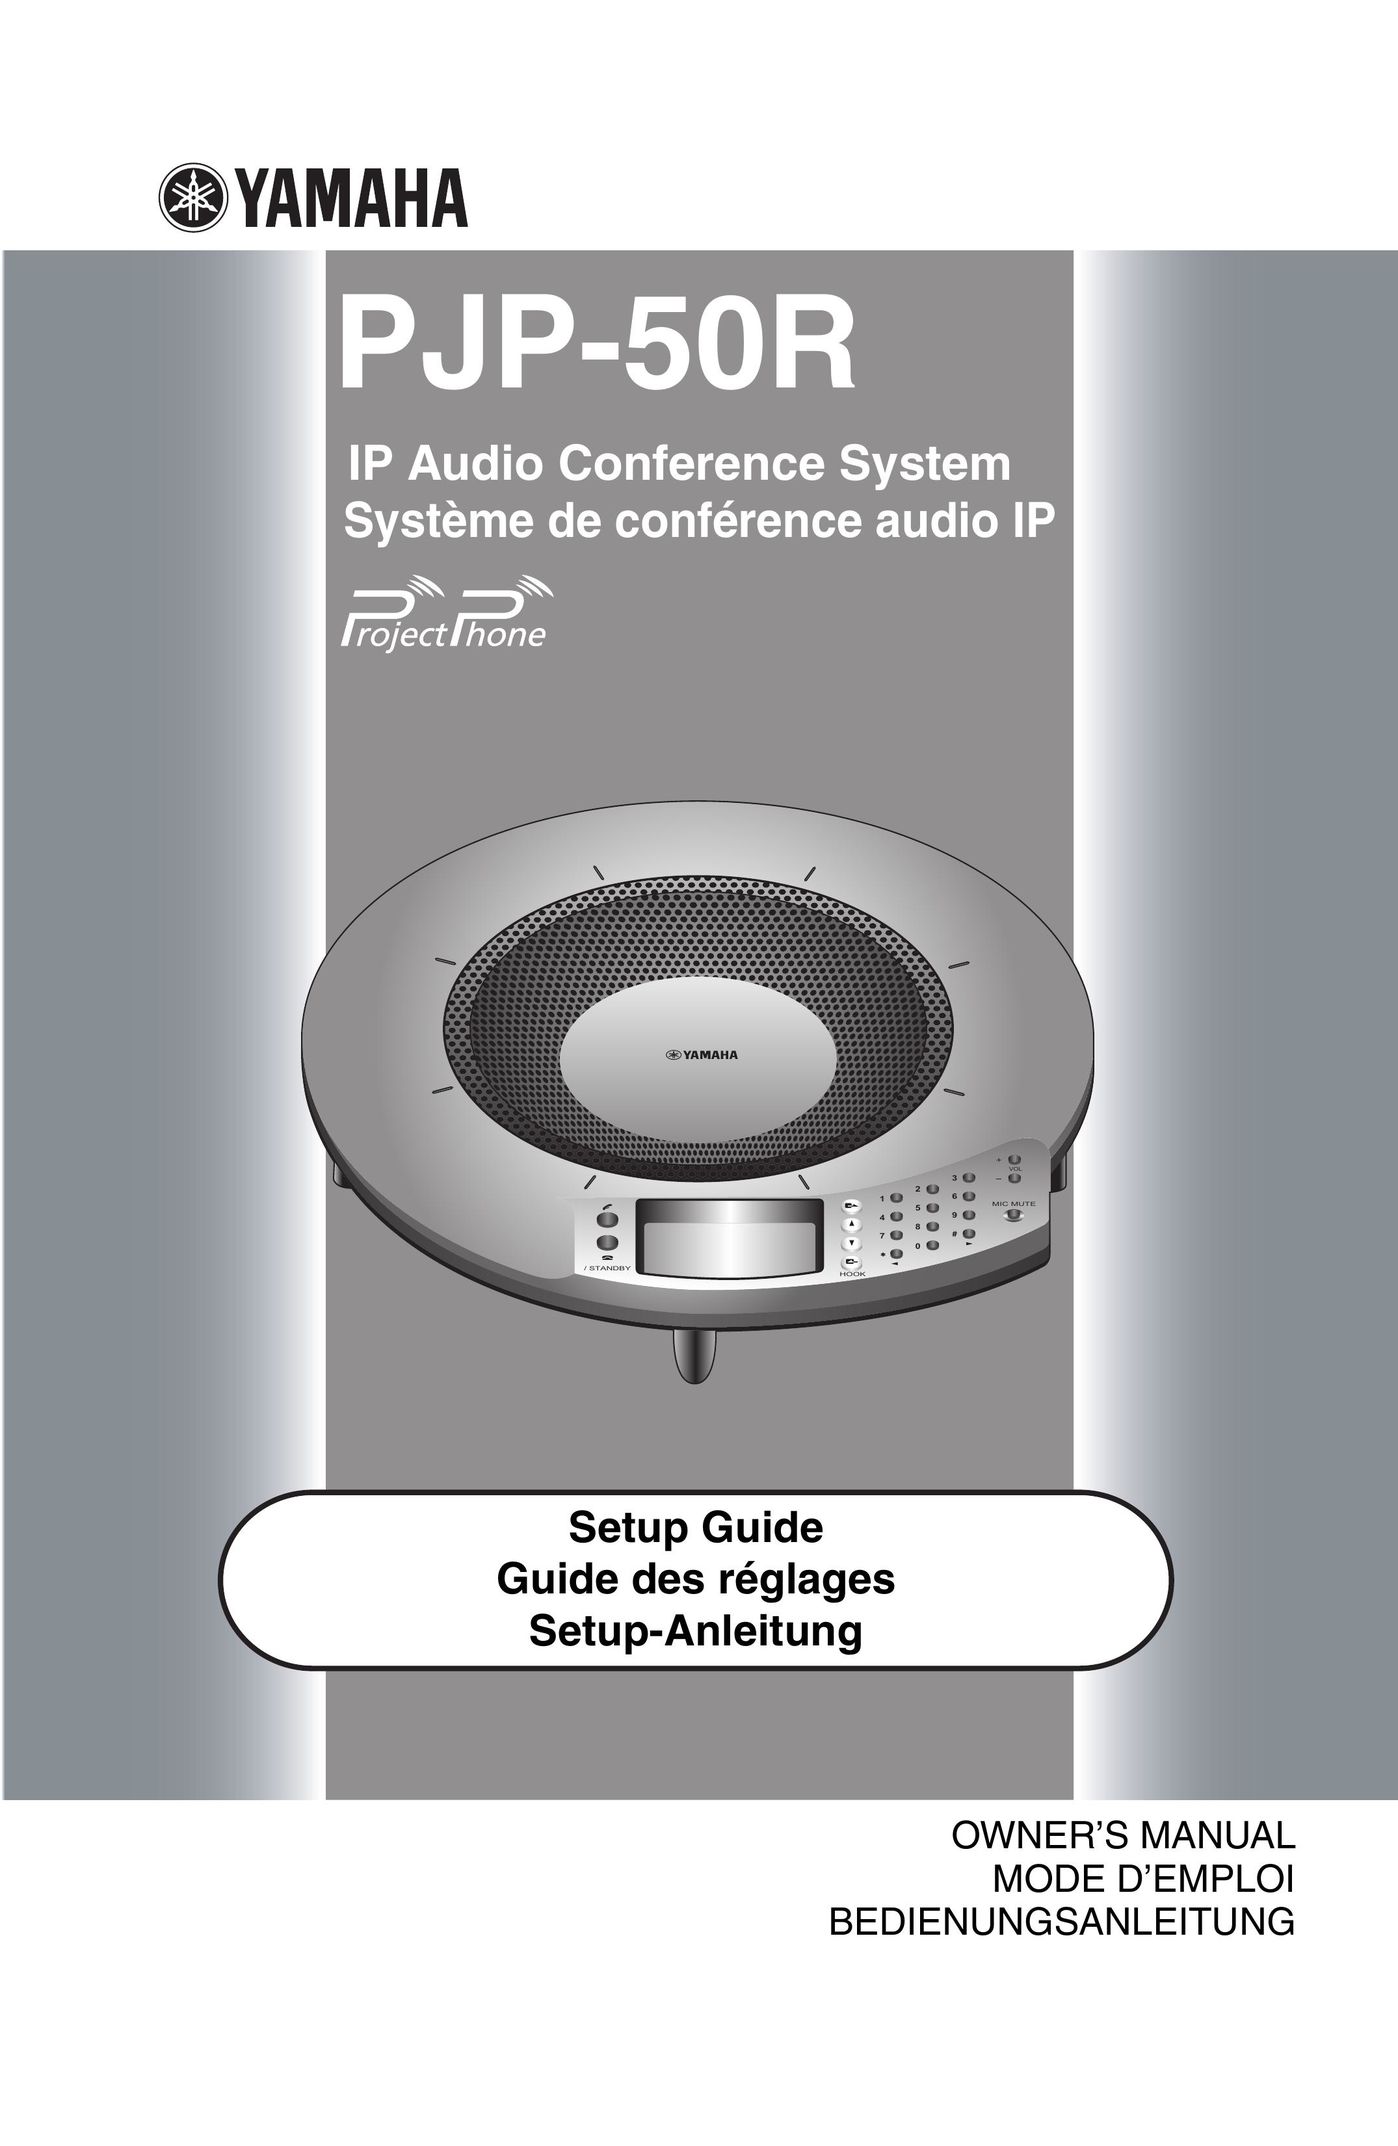 Yamaha PJP-50R Conference Phone User Manual